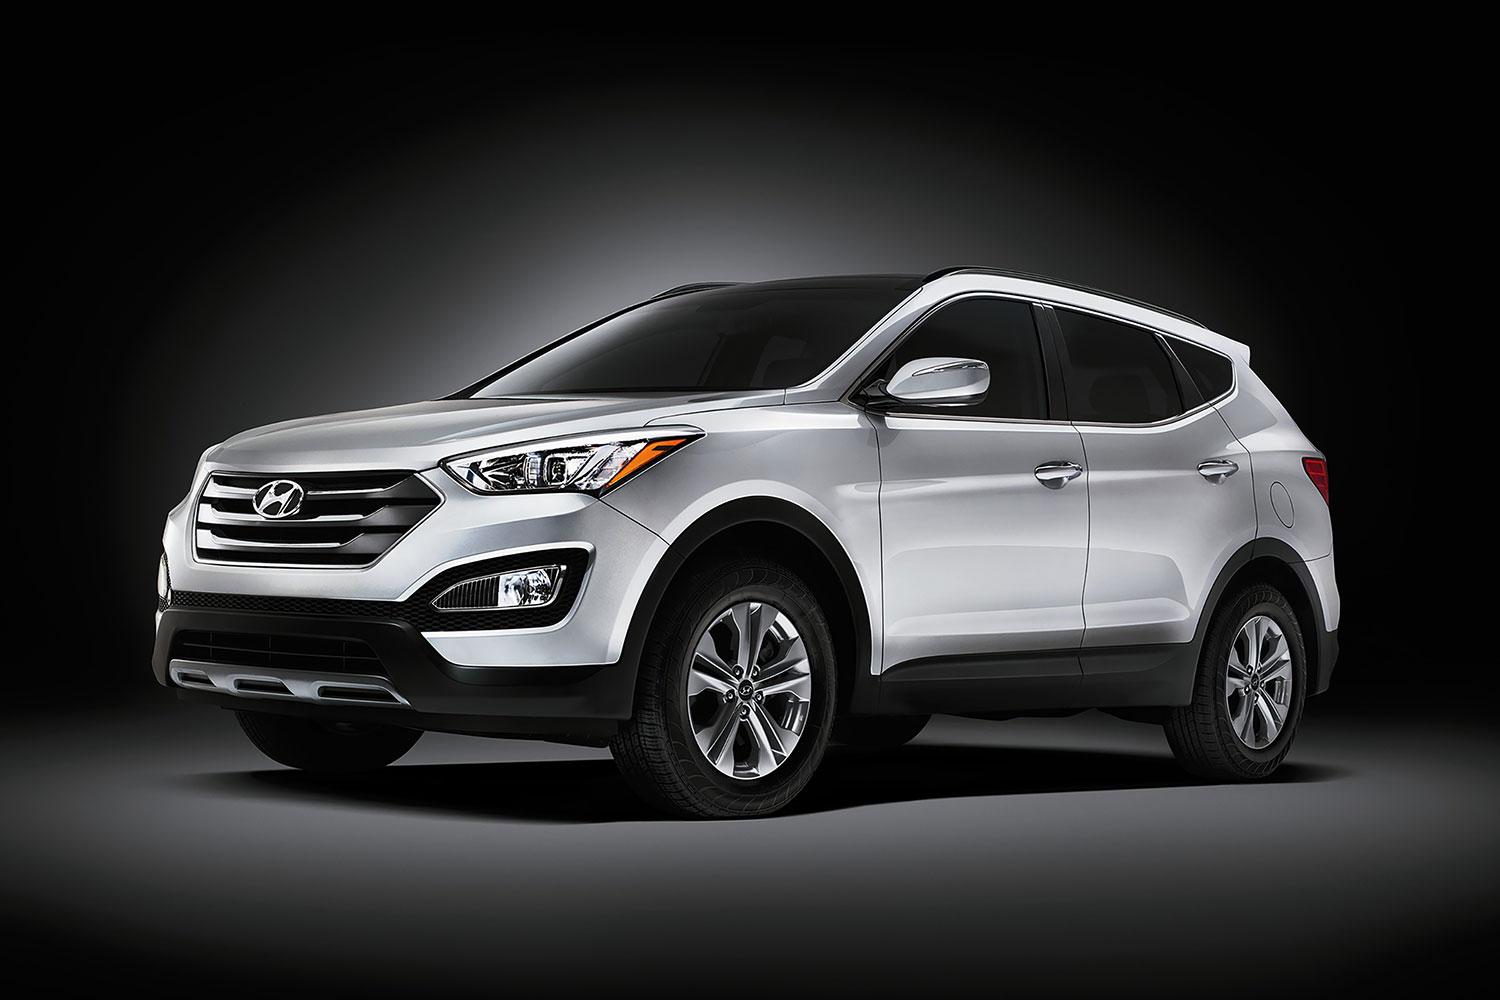 Đánh giá xe Hyundai Santafe 2015